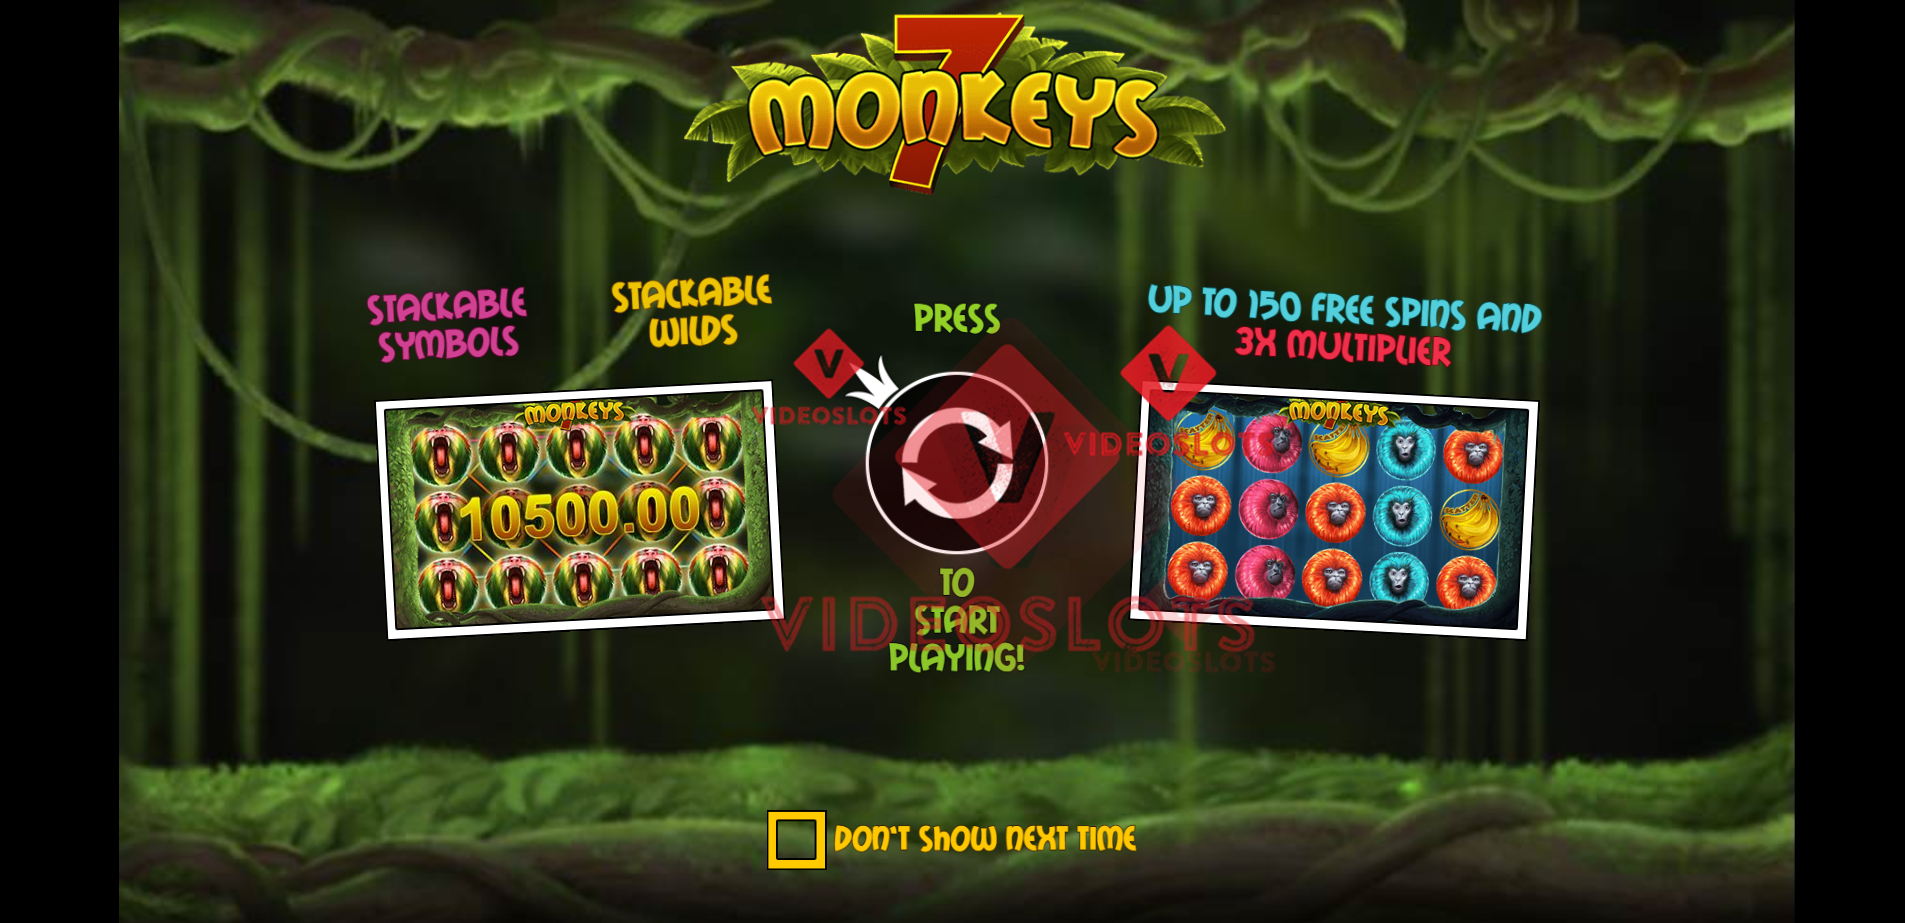 Game Intro for 7 Monkeys slot by Pragmatic Play